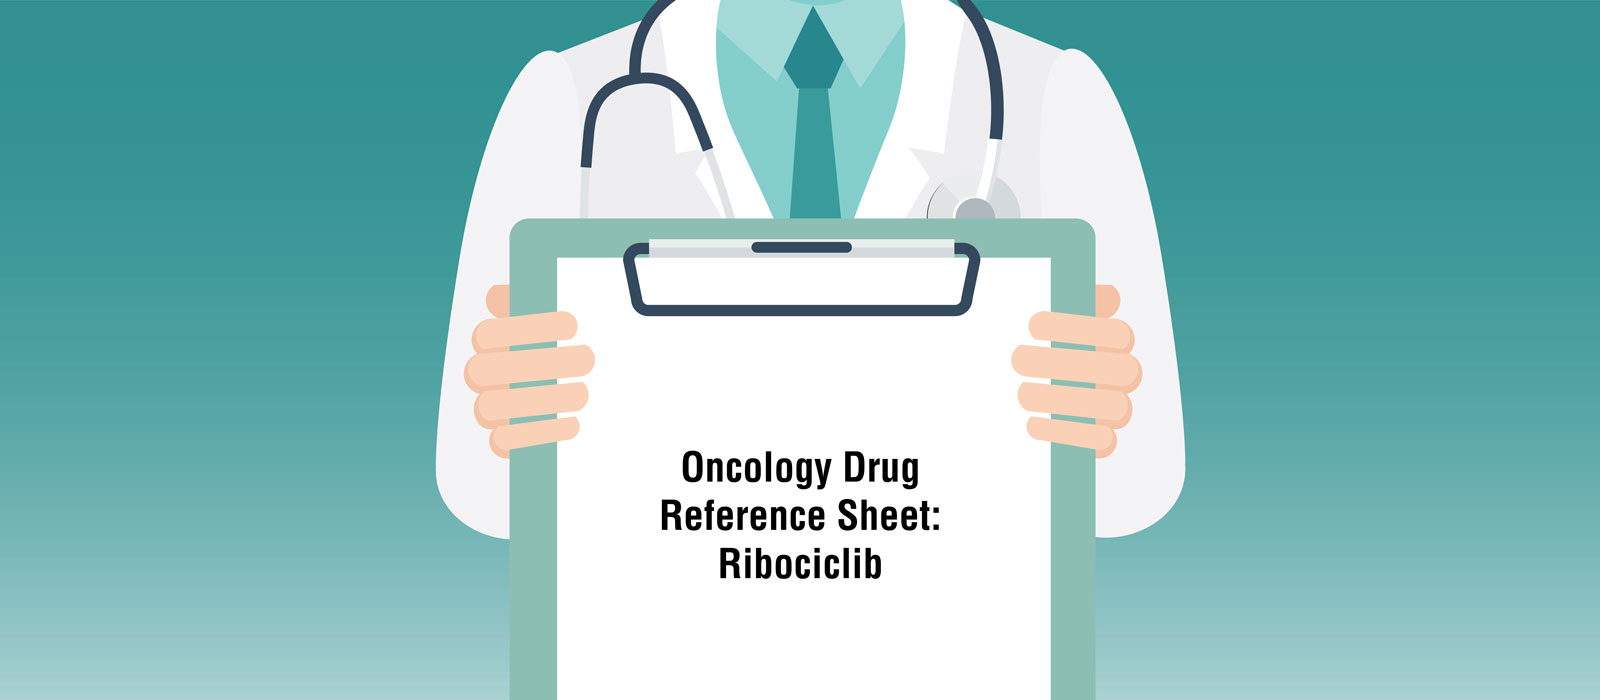 Oncology Drug Reference Sheet: Ribociclib